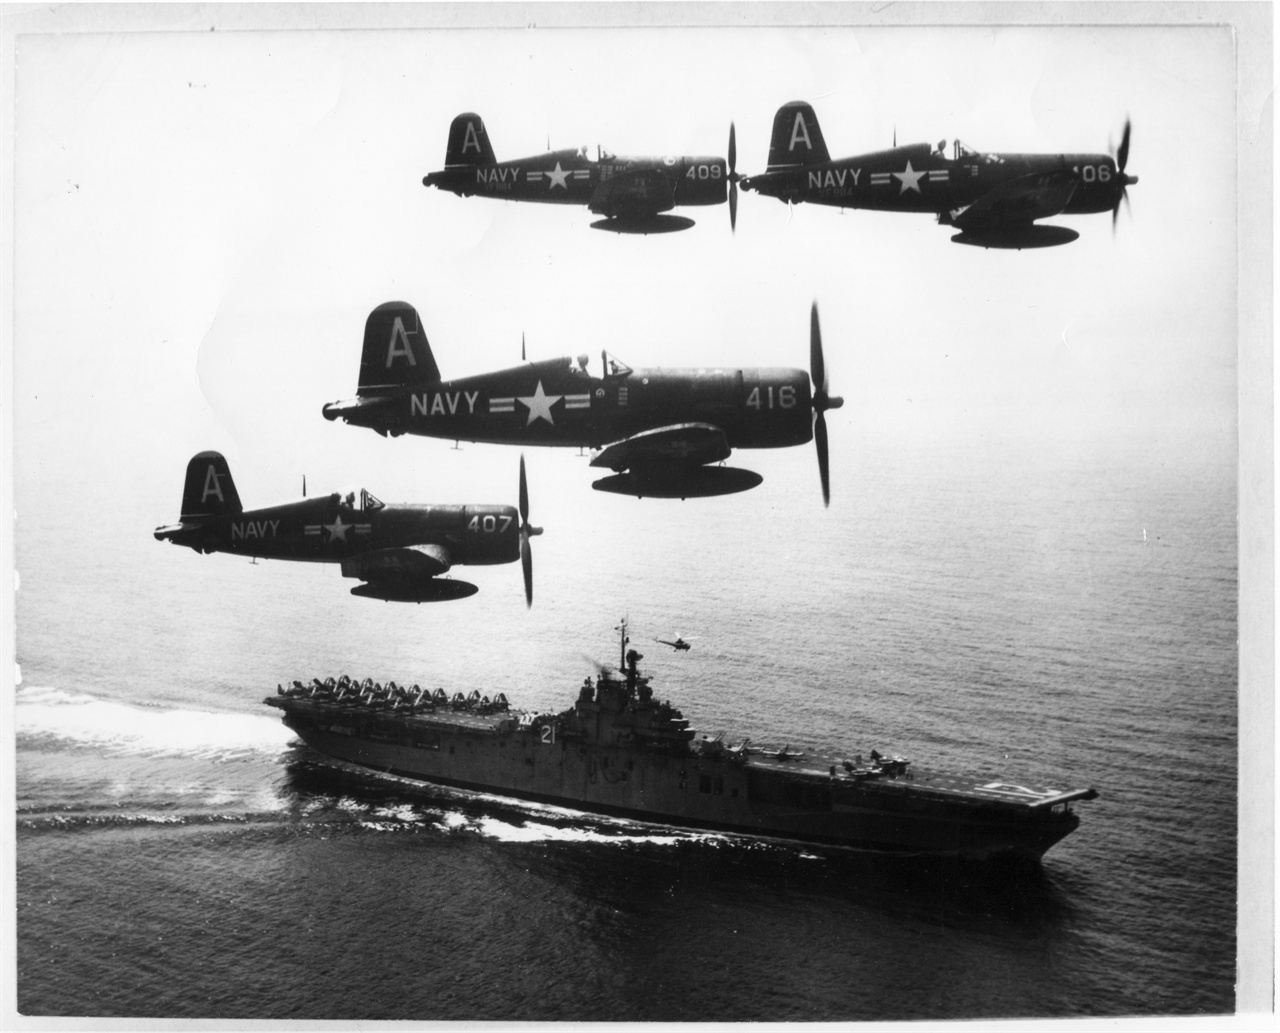 1951. 9. 4. l 미 해군 전투기가 폭탄을 잔뜩 장전한 채 항공모함을 떠나고 있다.